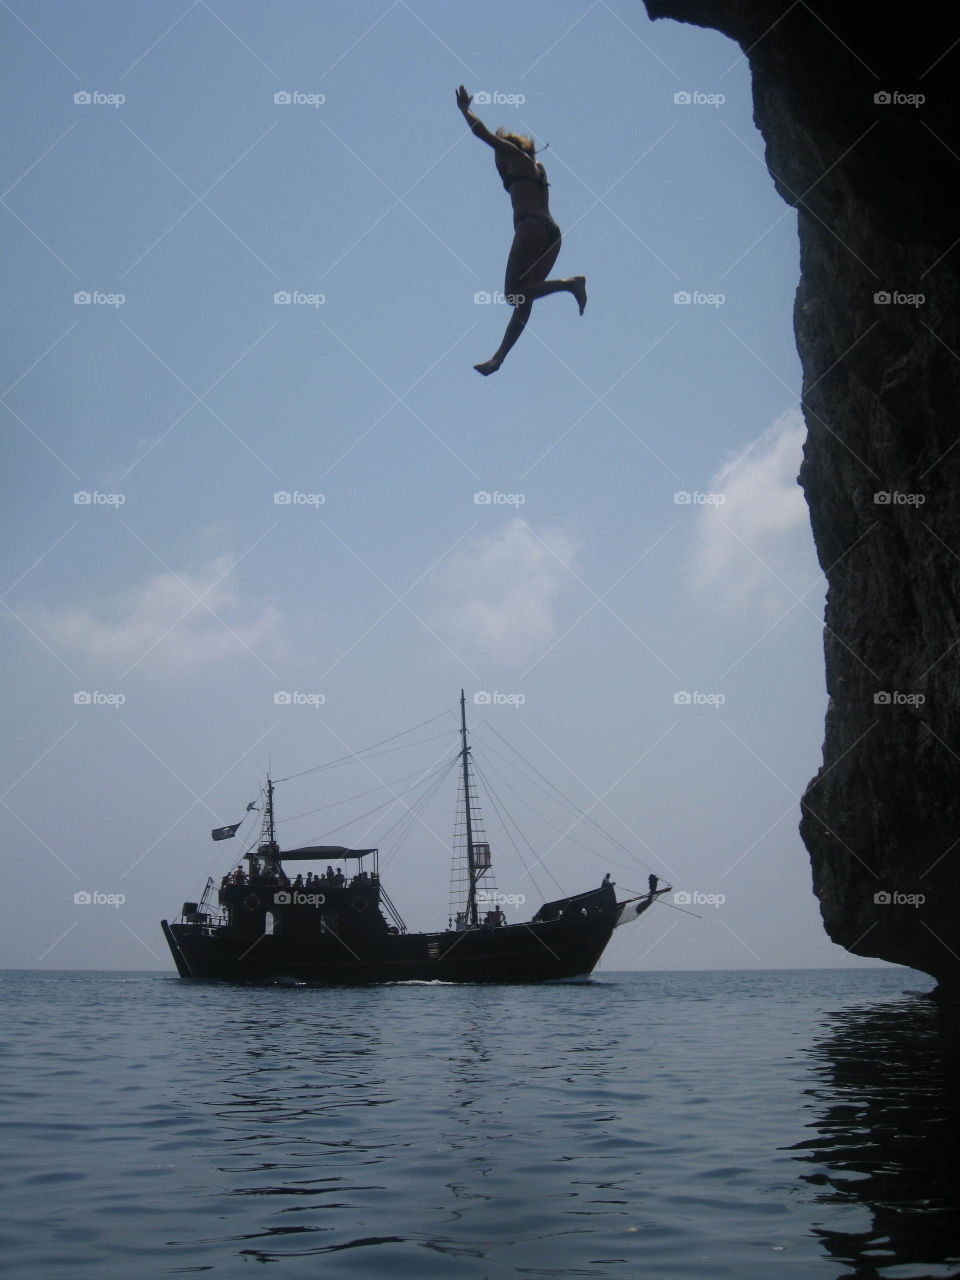 1, 2, 3 - JUMP!. Jumping off cliffs. Cyprus.